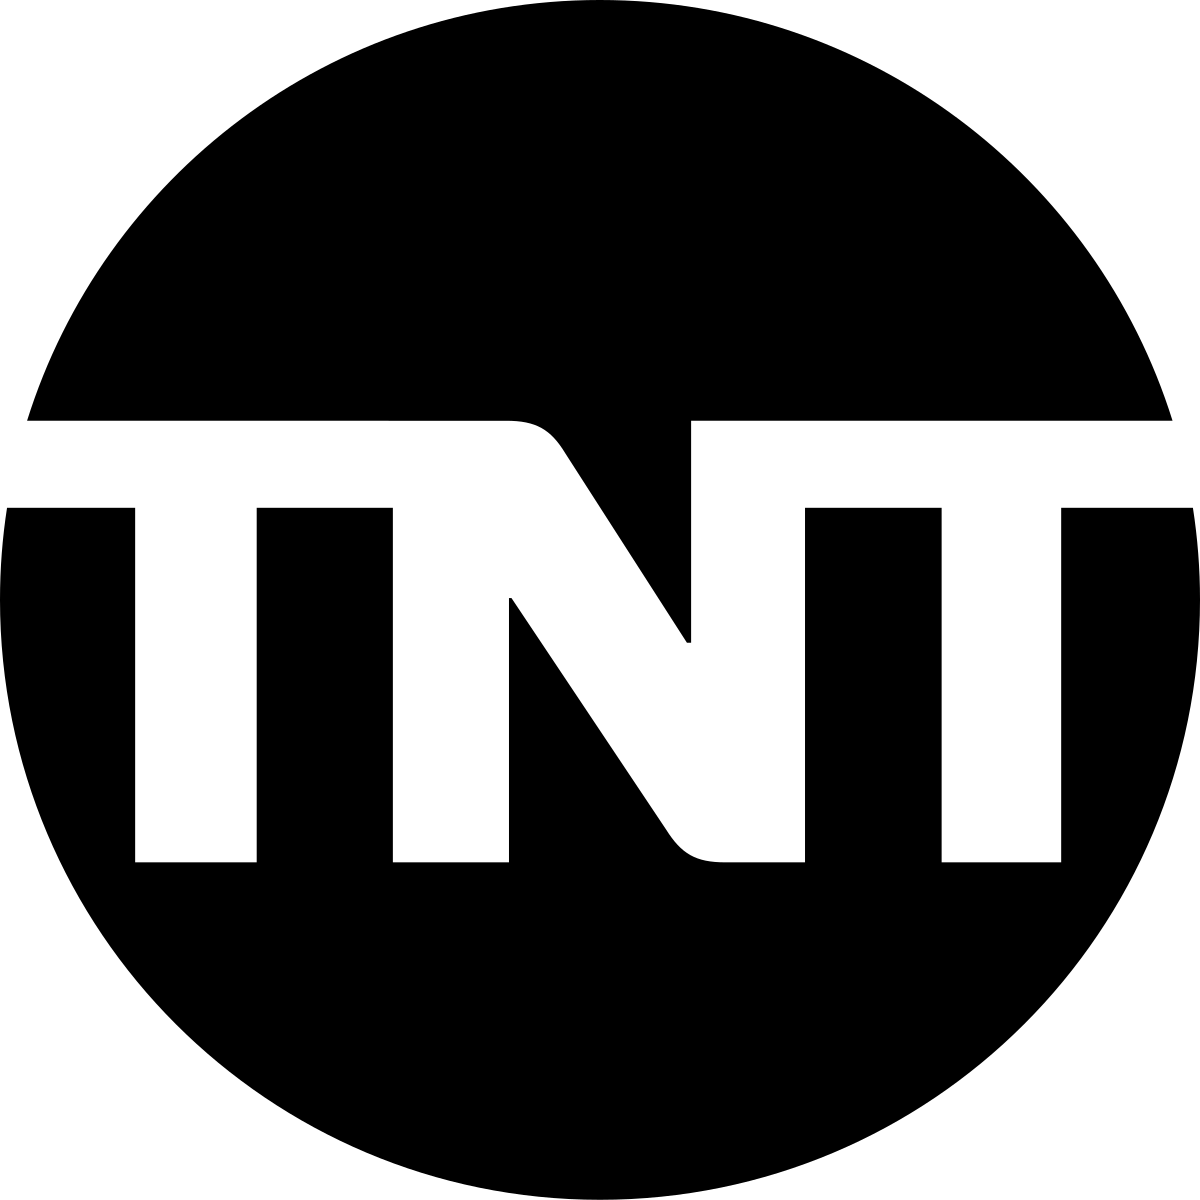 truTV Logo - TNT (U.S. TV network)